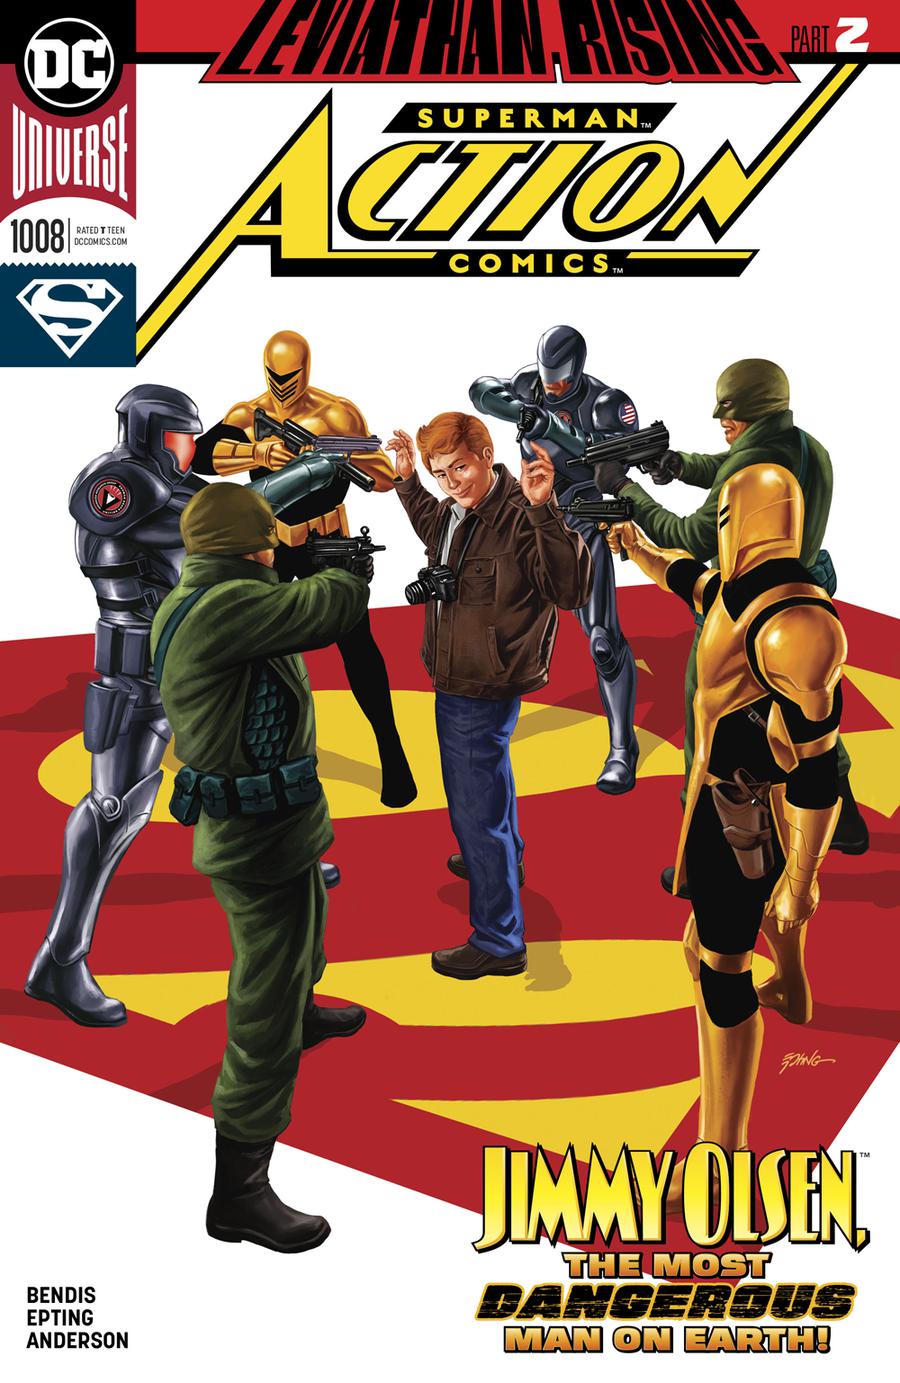 Action Comics Vol 2 #1008 Cover A Regular Steve Epting Cover